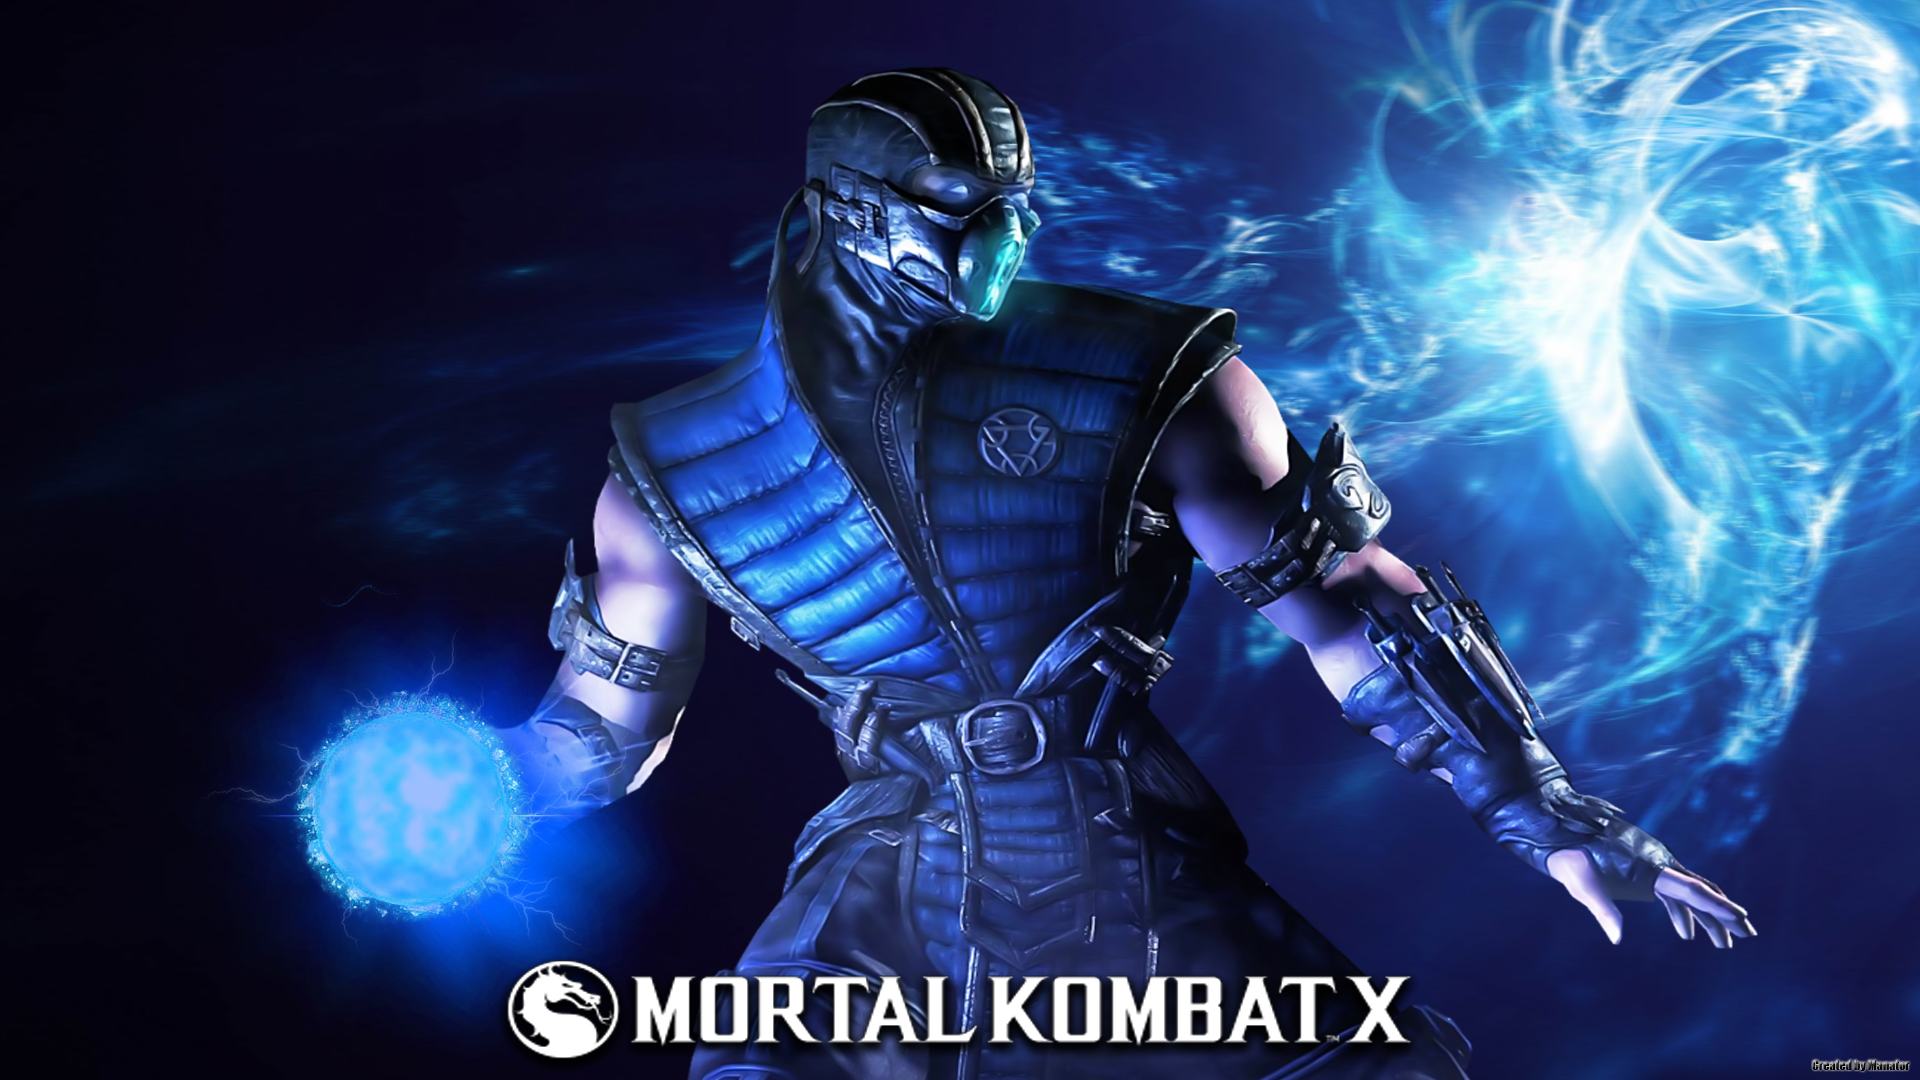  Mortal Kombat X